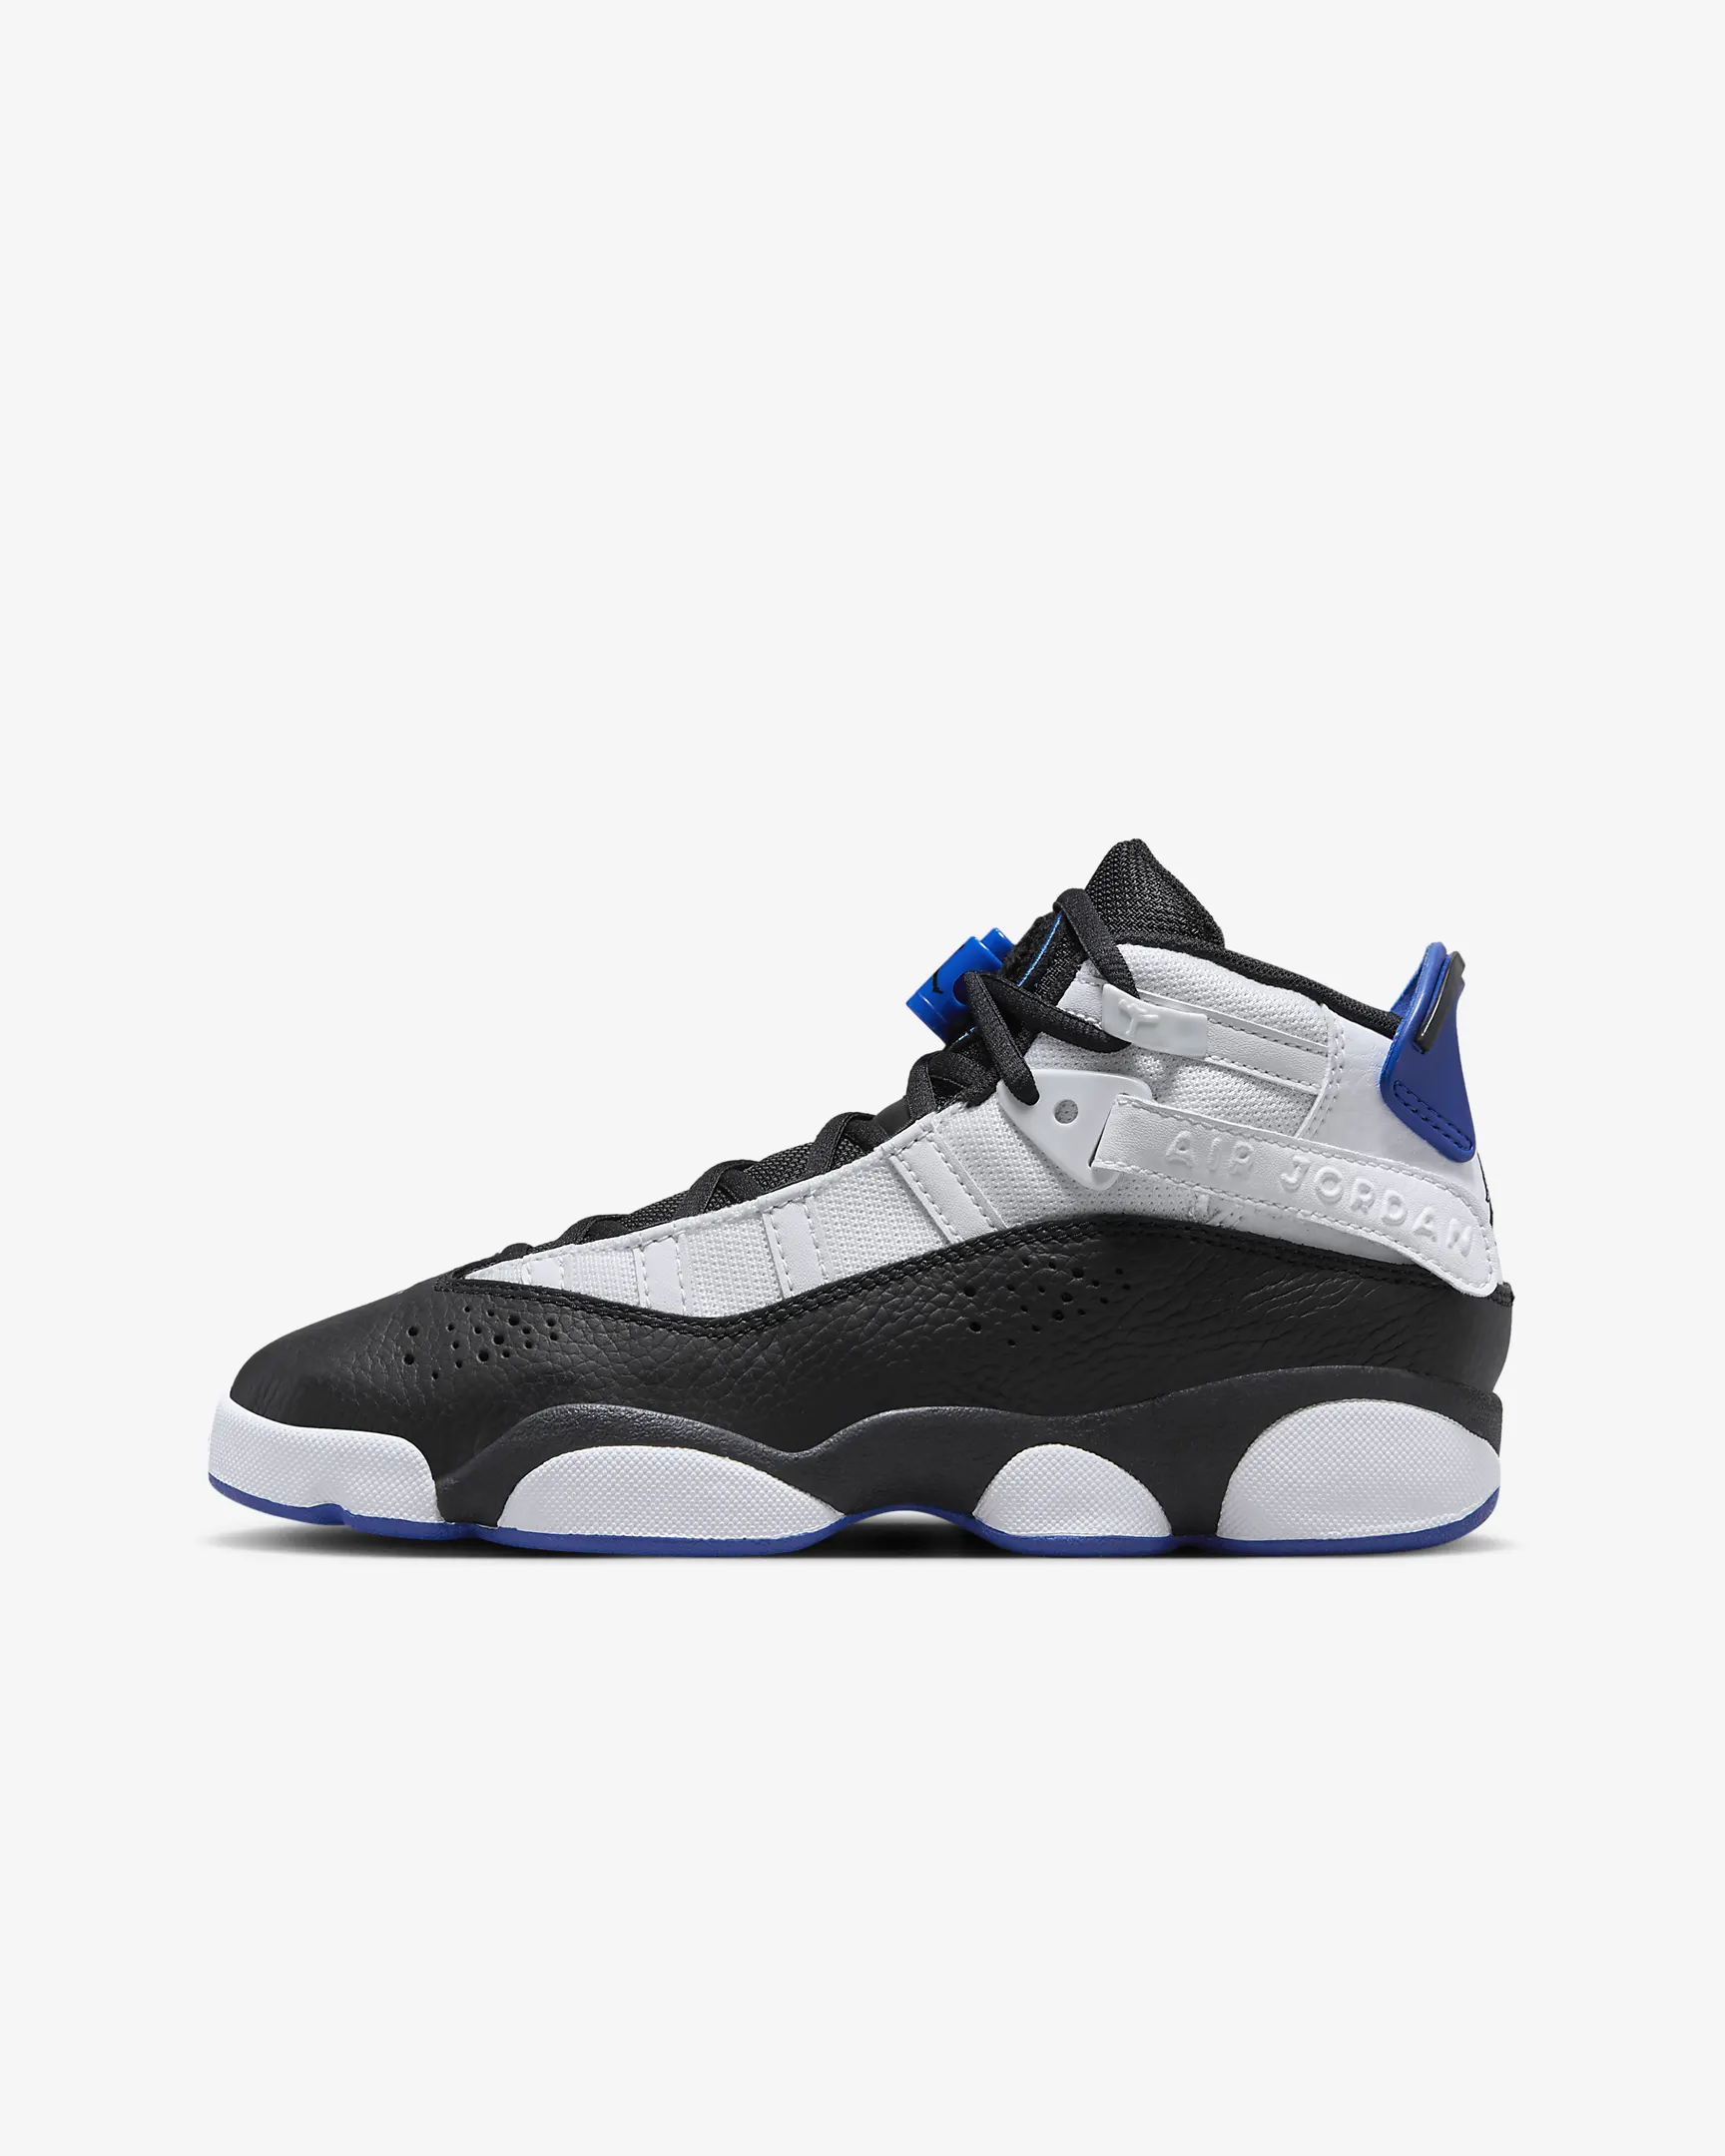 Nike Jordan 6 Rings Black Infrared Bred Retro Sneakers 322992-066 Mens Size  | eBay